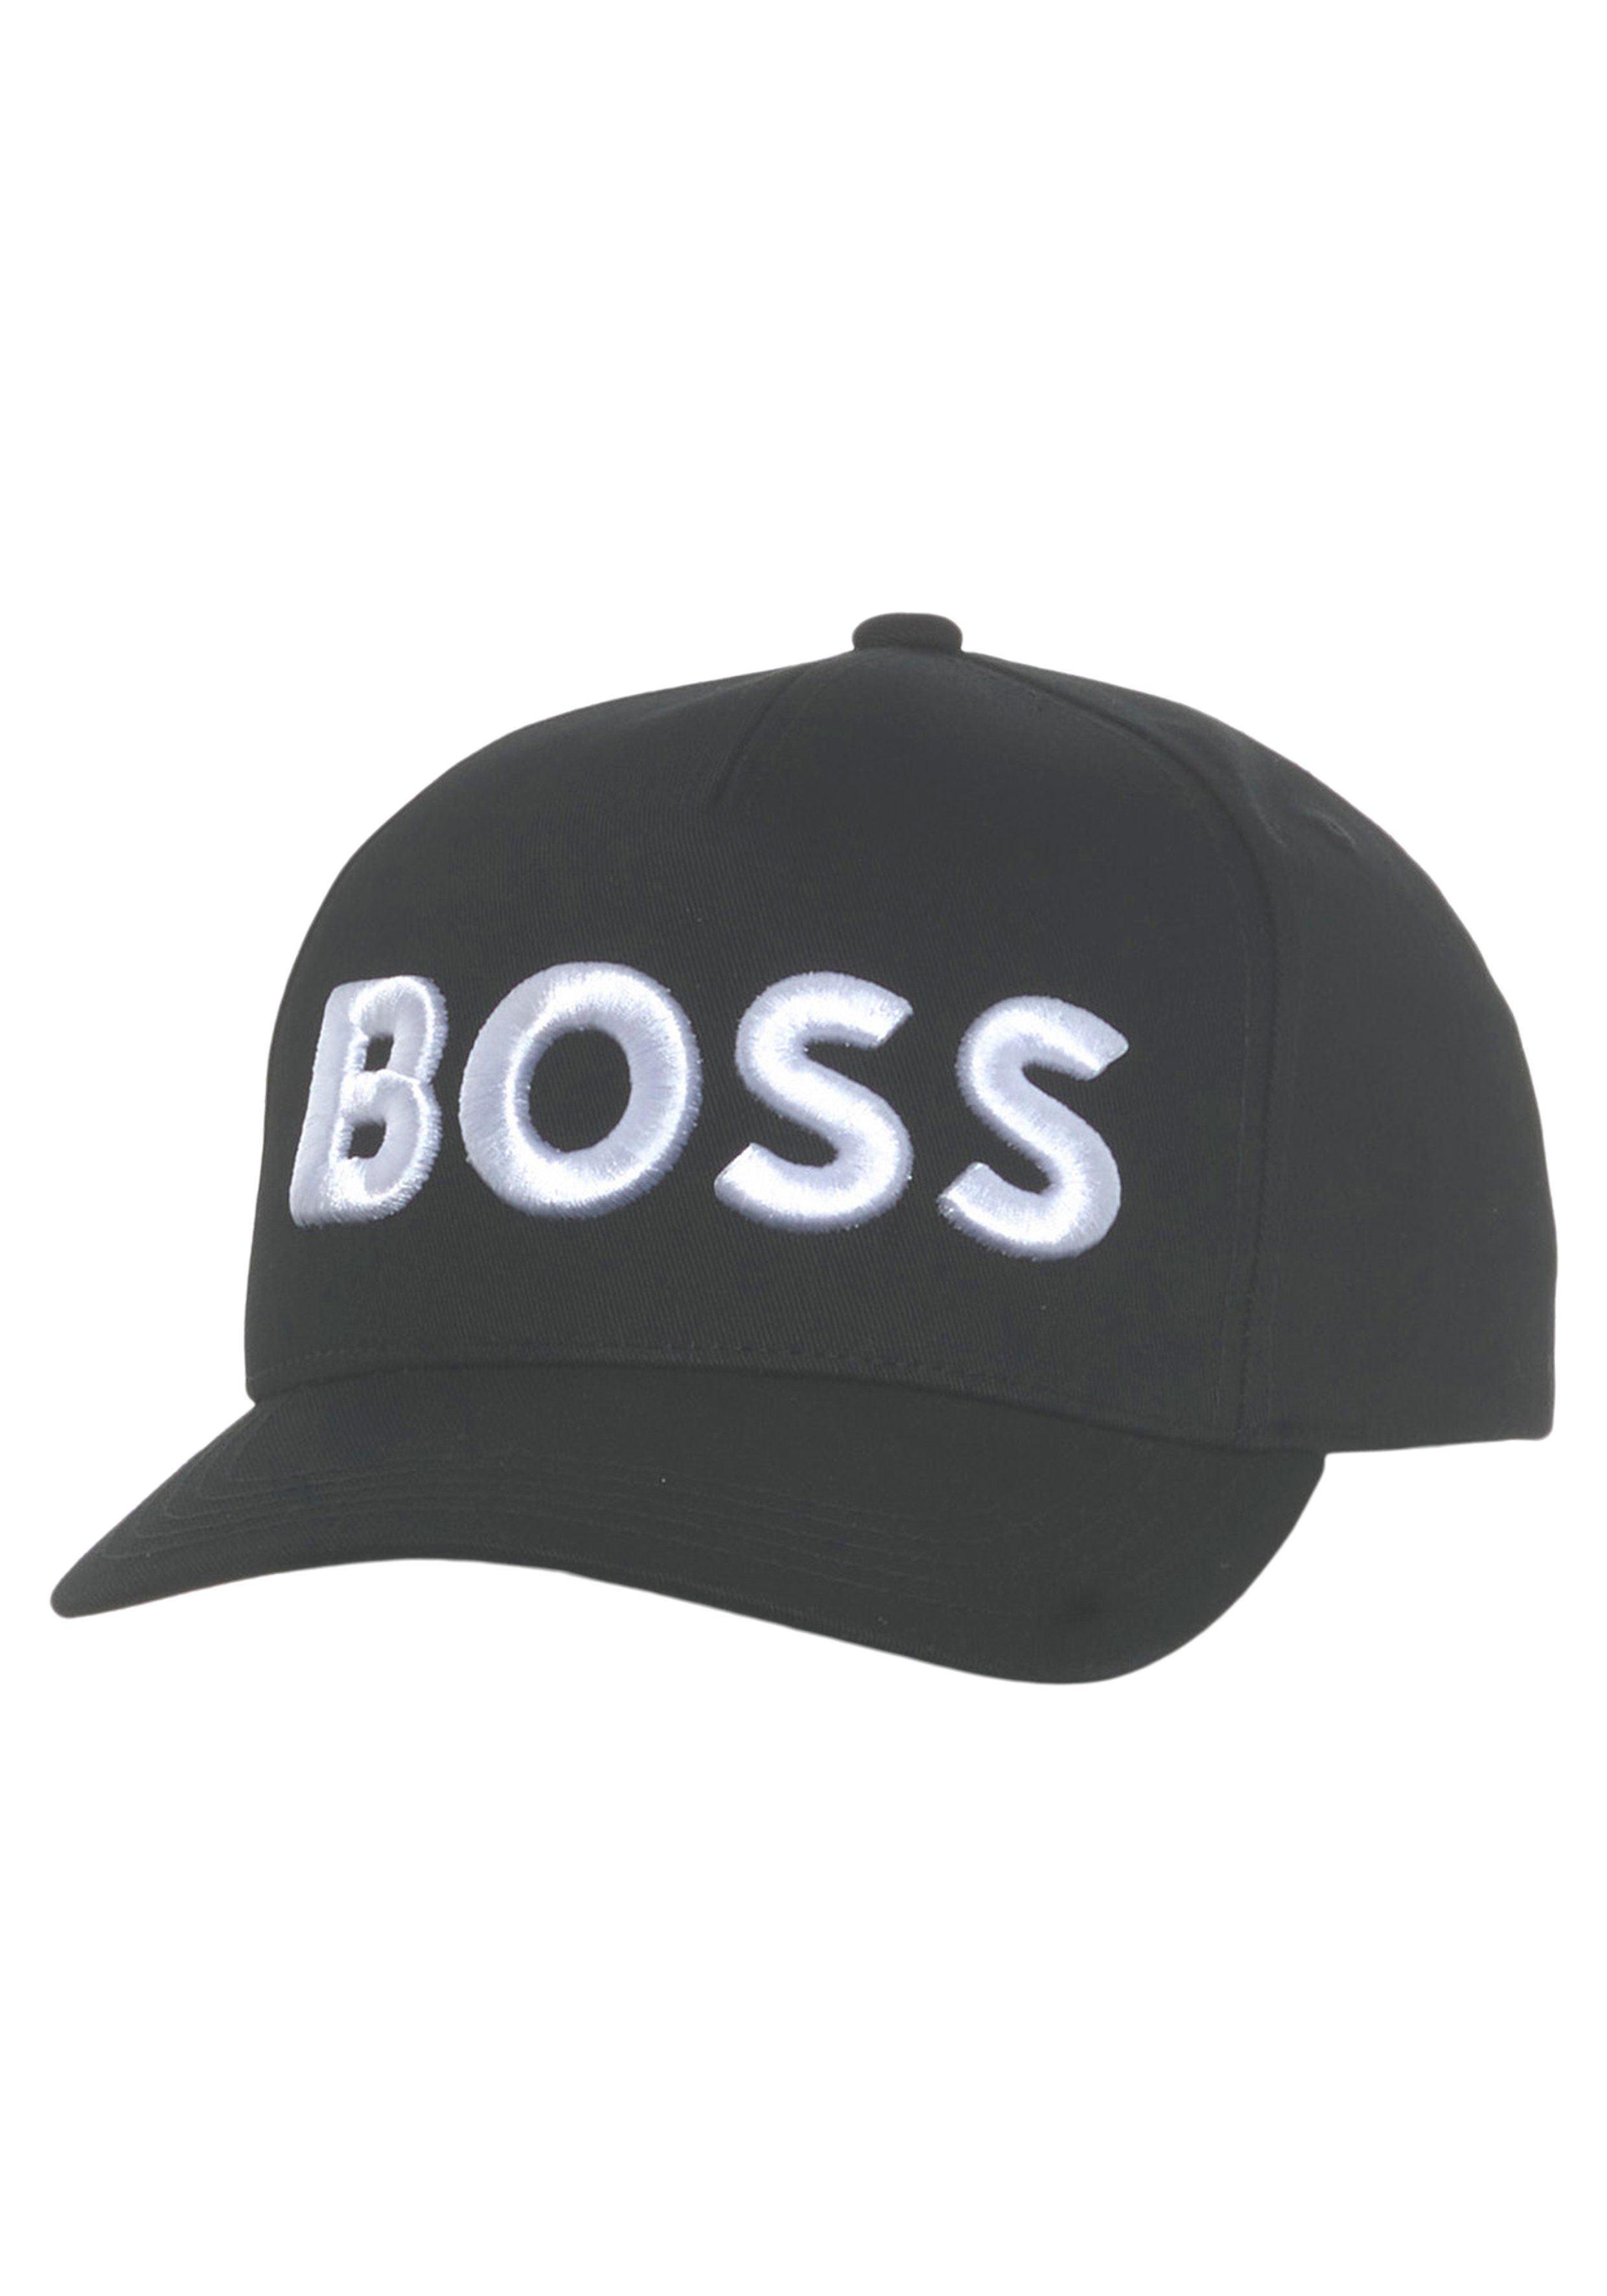 Sevile-BOSS-6 mit Cap BOSS Labelschriftzug Black Baseball kontrastfarbenem